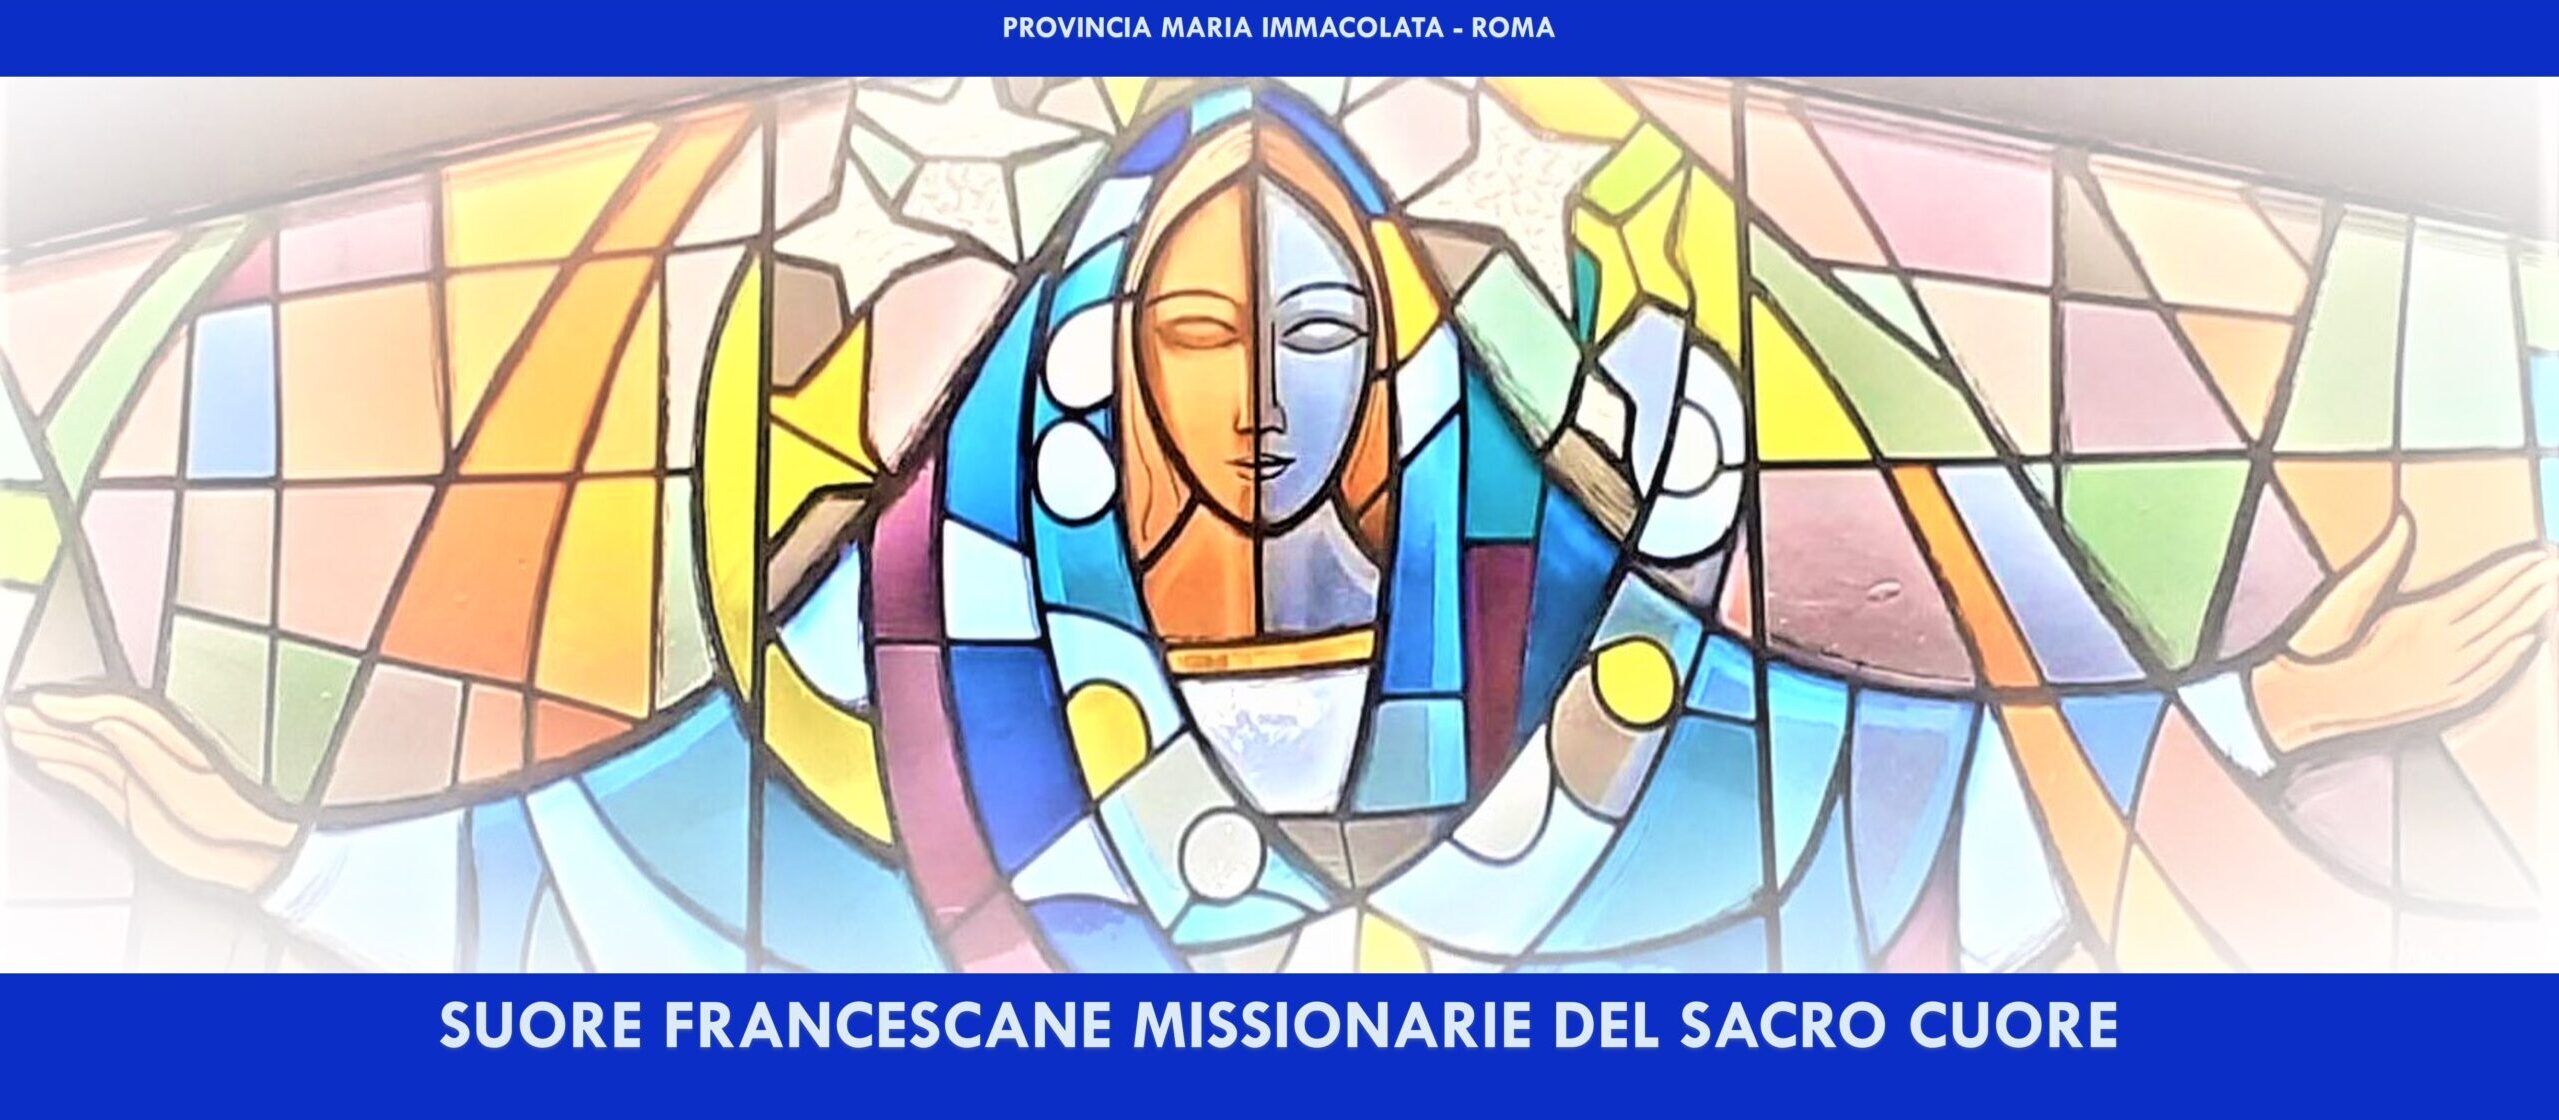 FRANCESCANE MISSIONARIE DEL SACRO CUORE